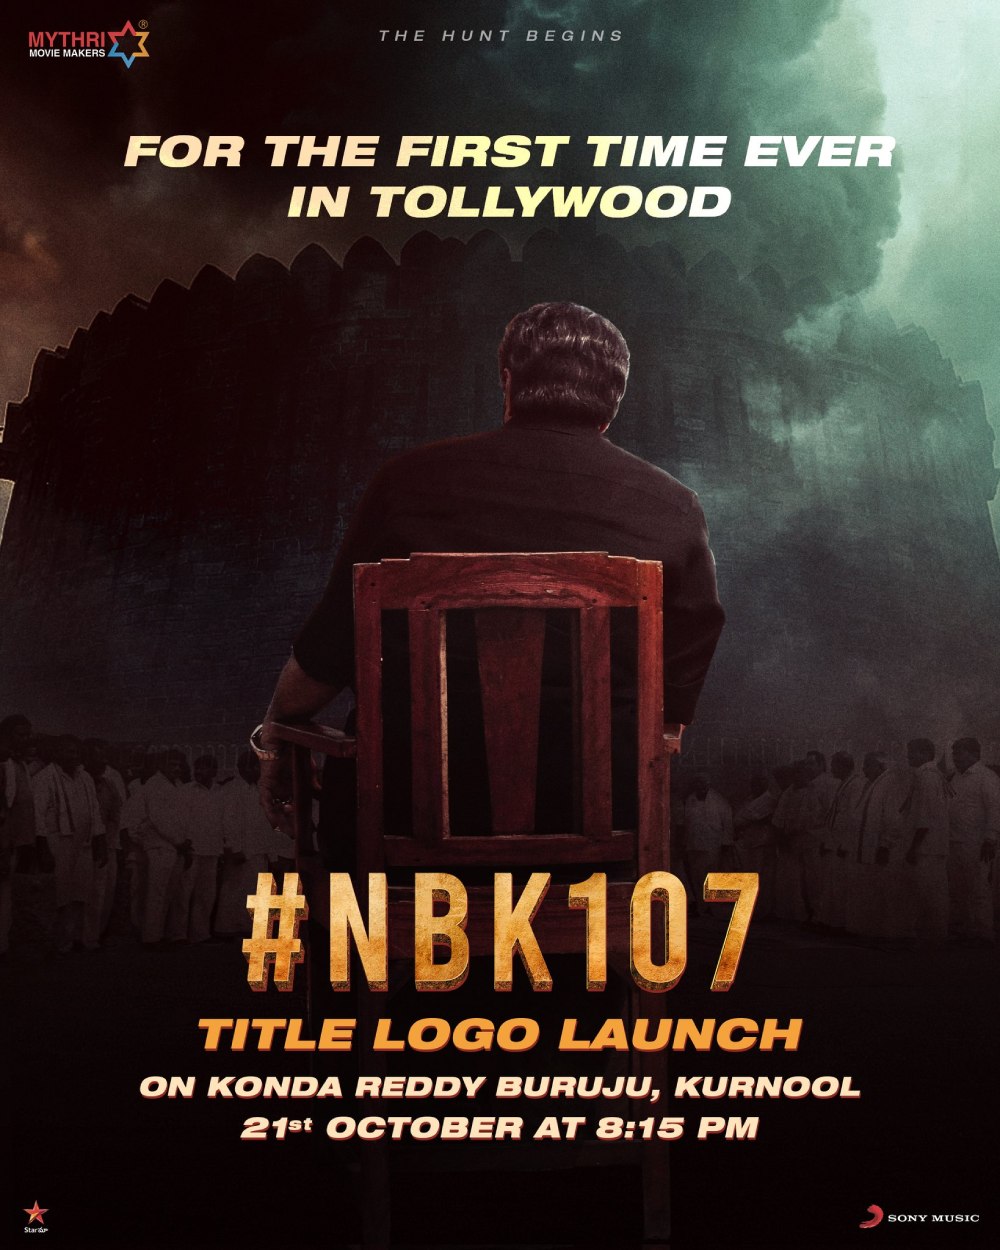 NBK107 title logo launch.